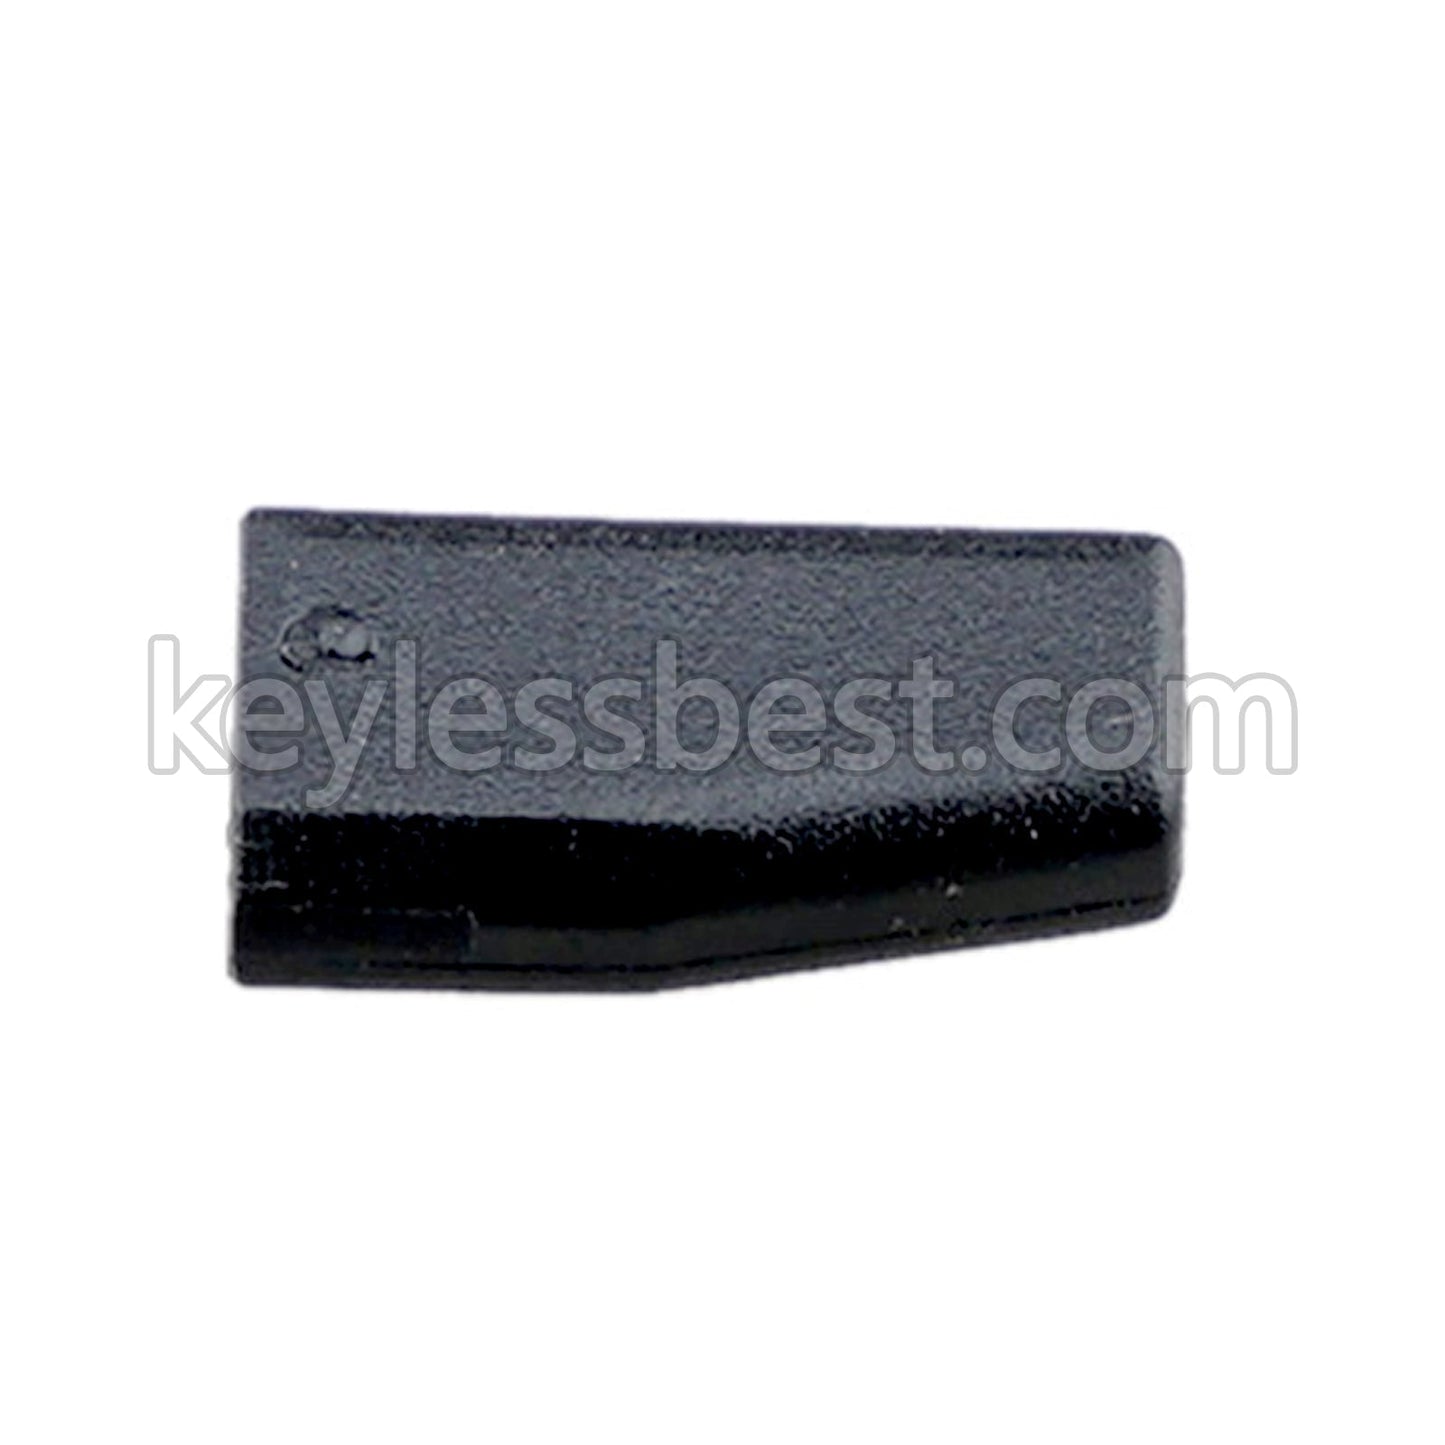 ID70 Key Chip High Quality Car Key Transponder Chip Immobiliser For Toyota Blank 4D70 Chip Auto Remote key